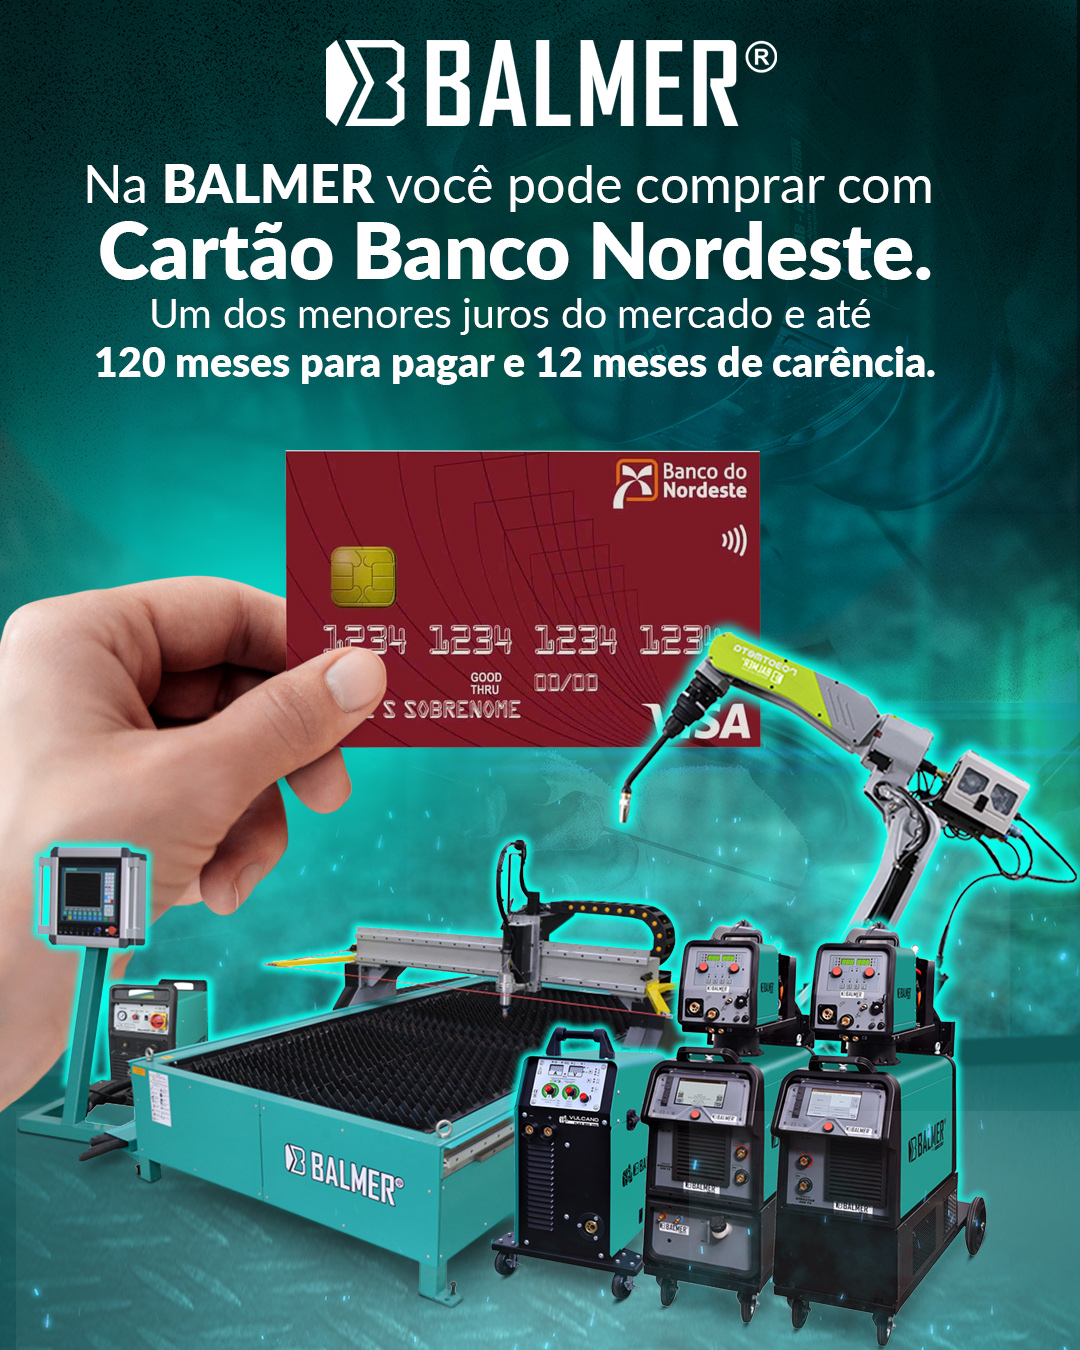 Na 𝗕𝗔𝗟𝗠𝗘𝗥 voc pode comprar com Carto Banco Nordeste.